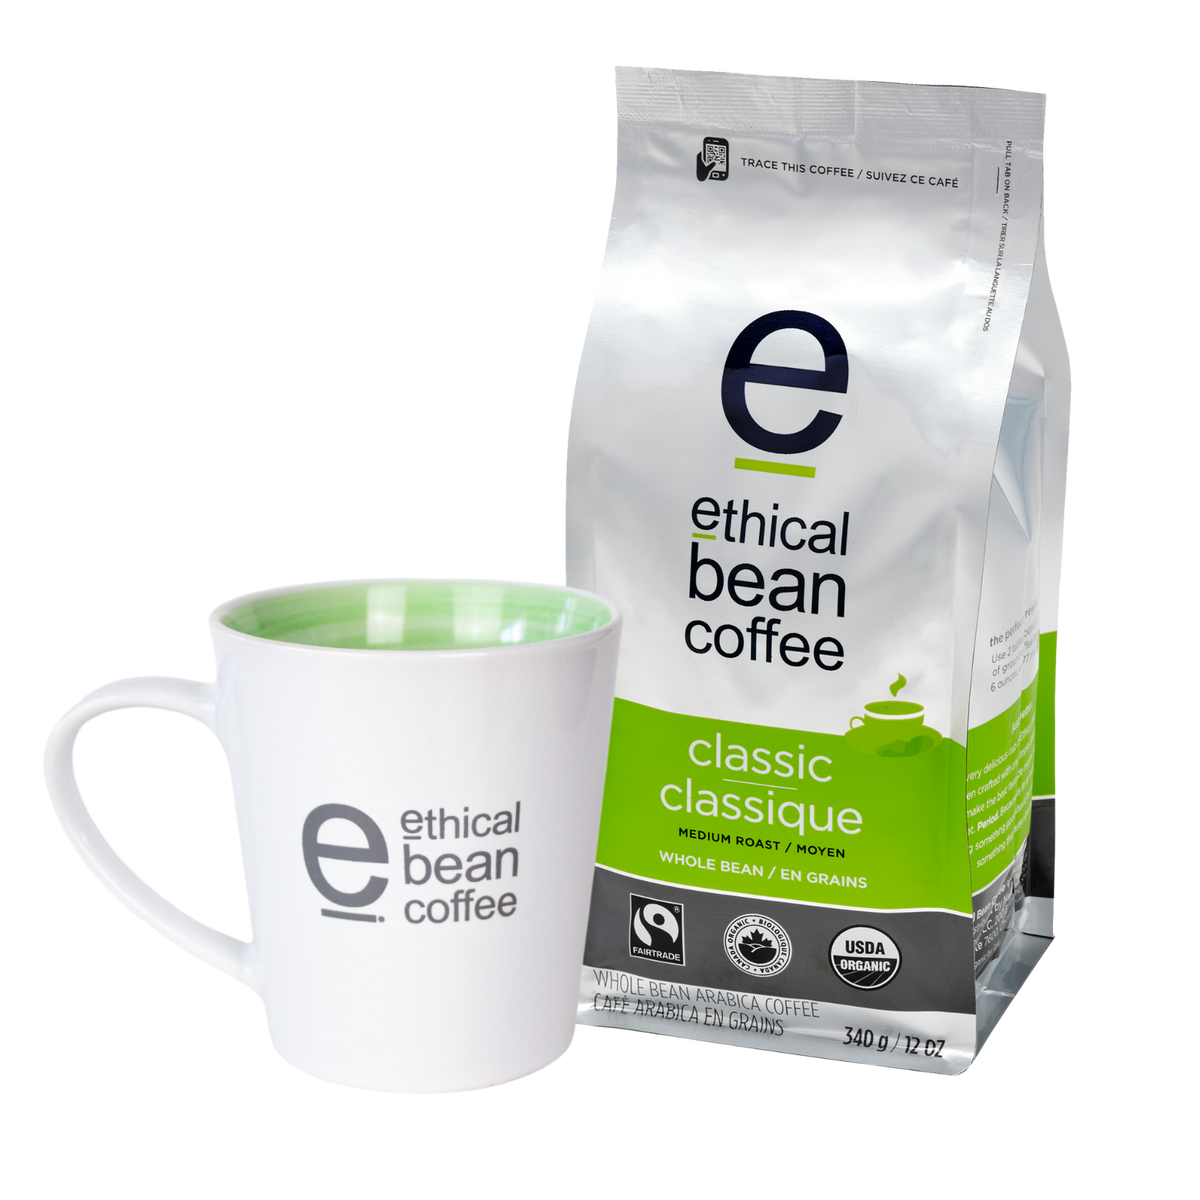 ethical-bean-coffee-mug